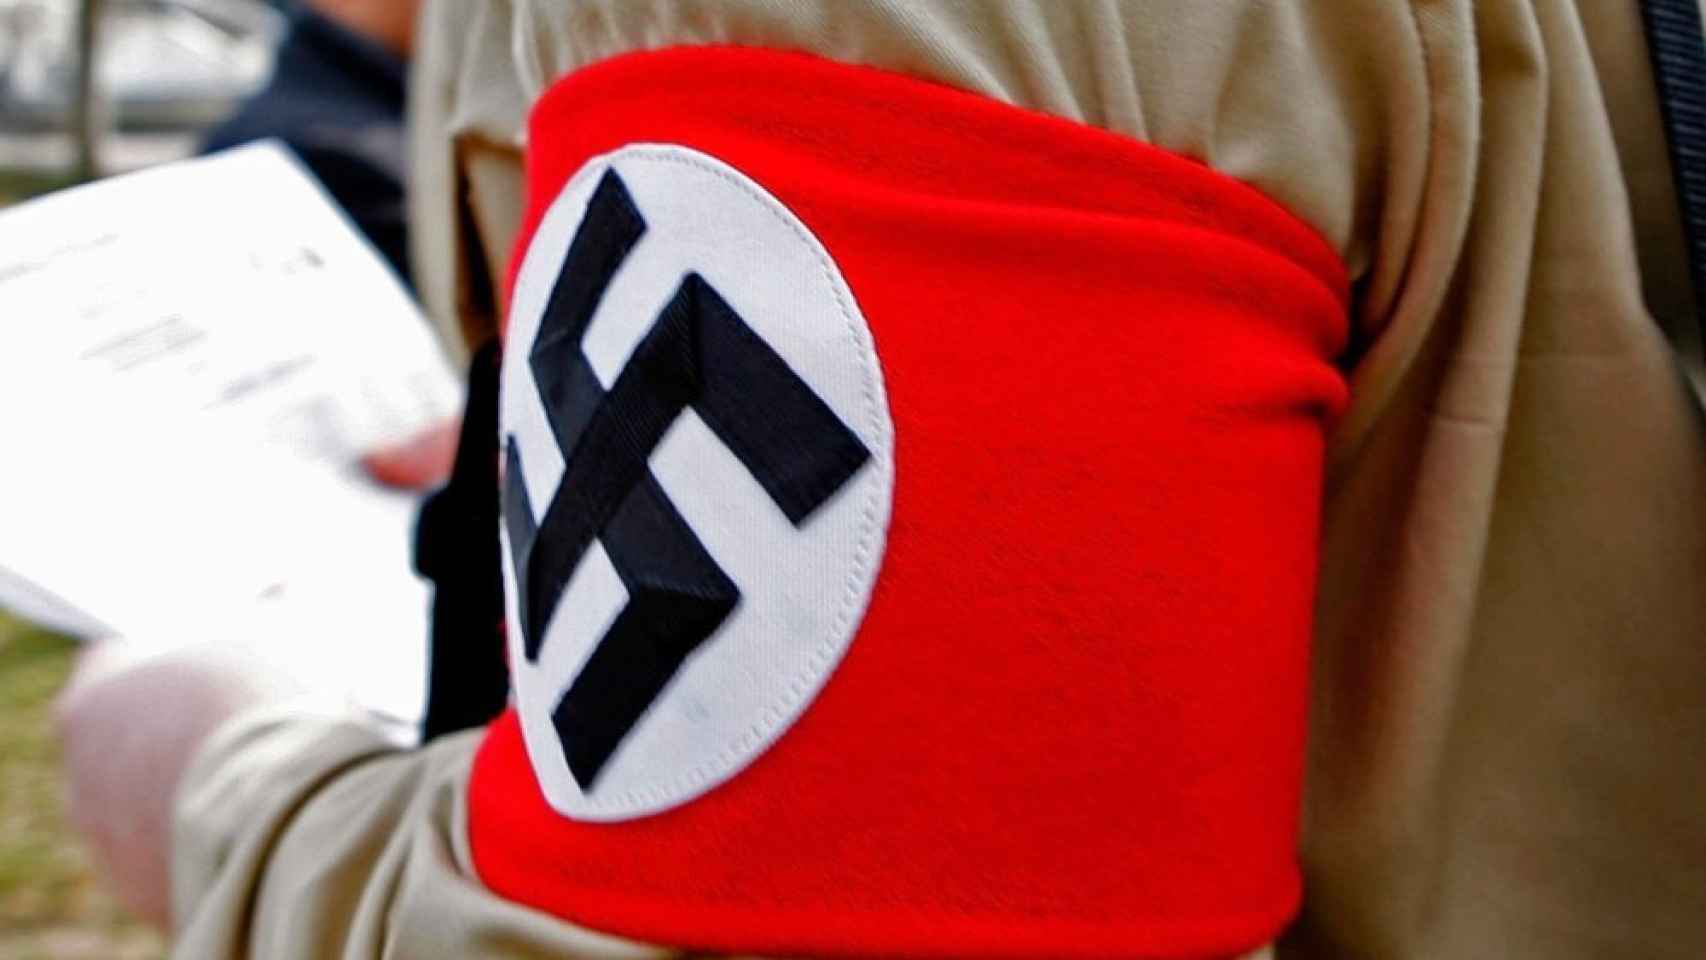 Esvástica símbolo nazi